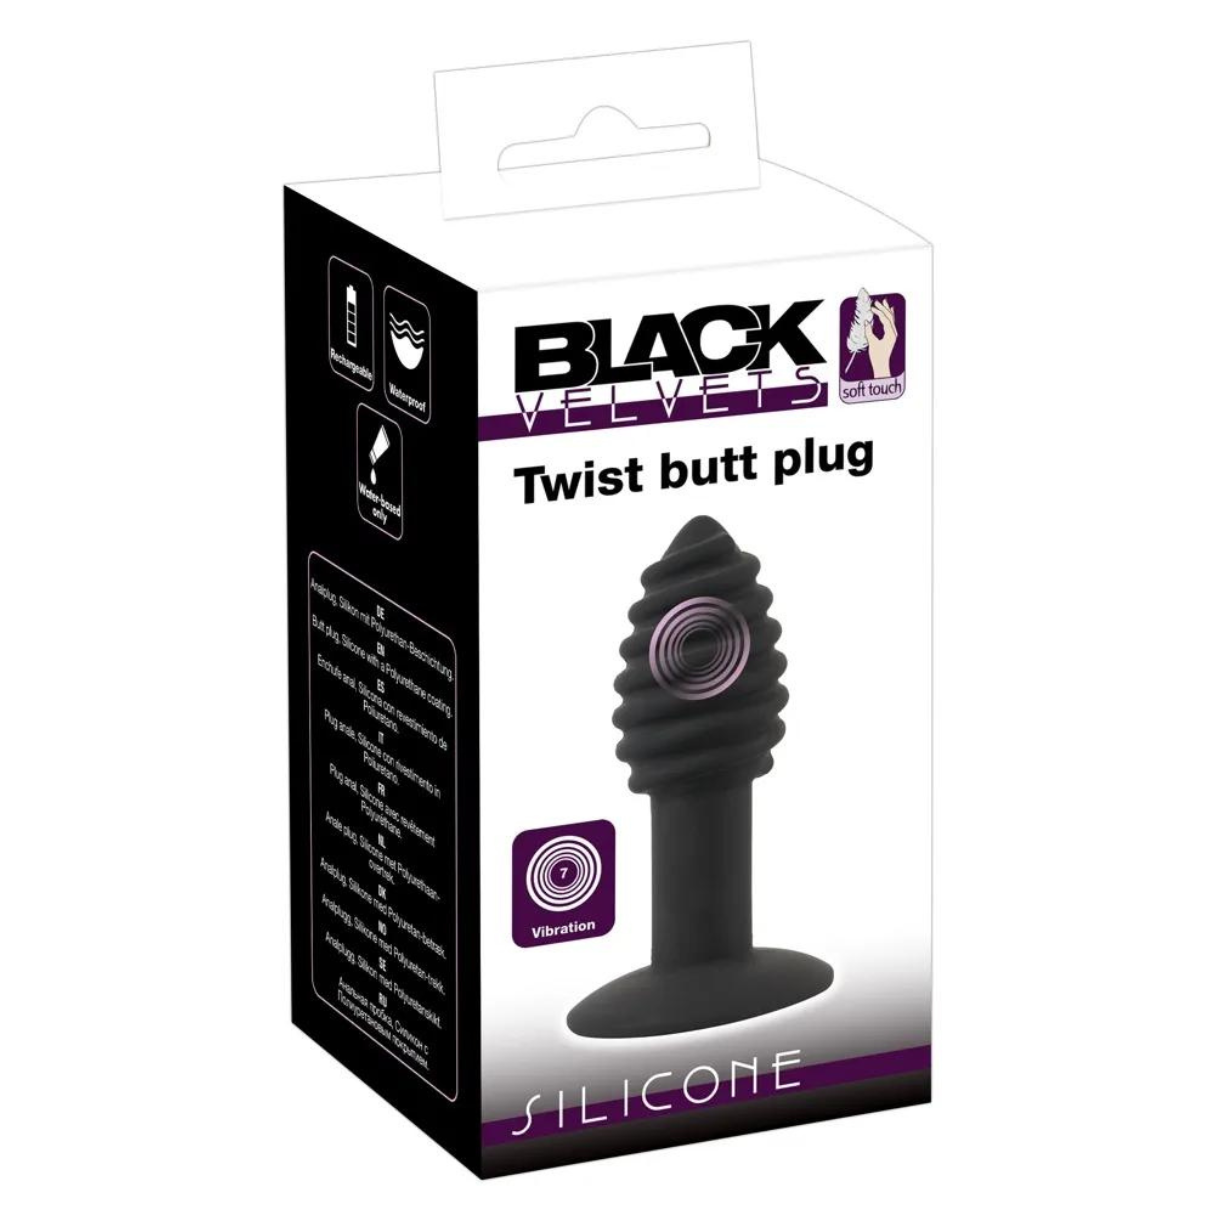 VELVETS plug Vibrator BLACK Twist butt